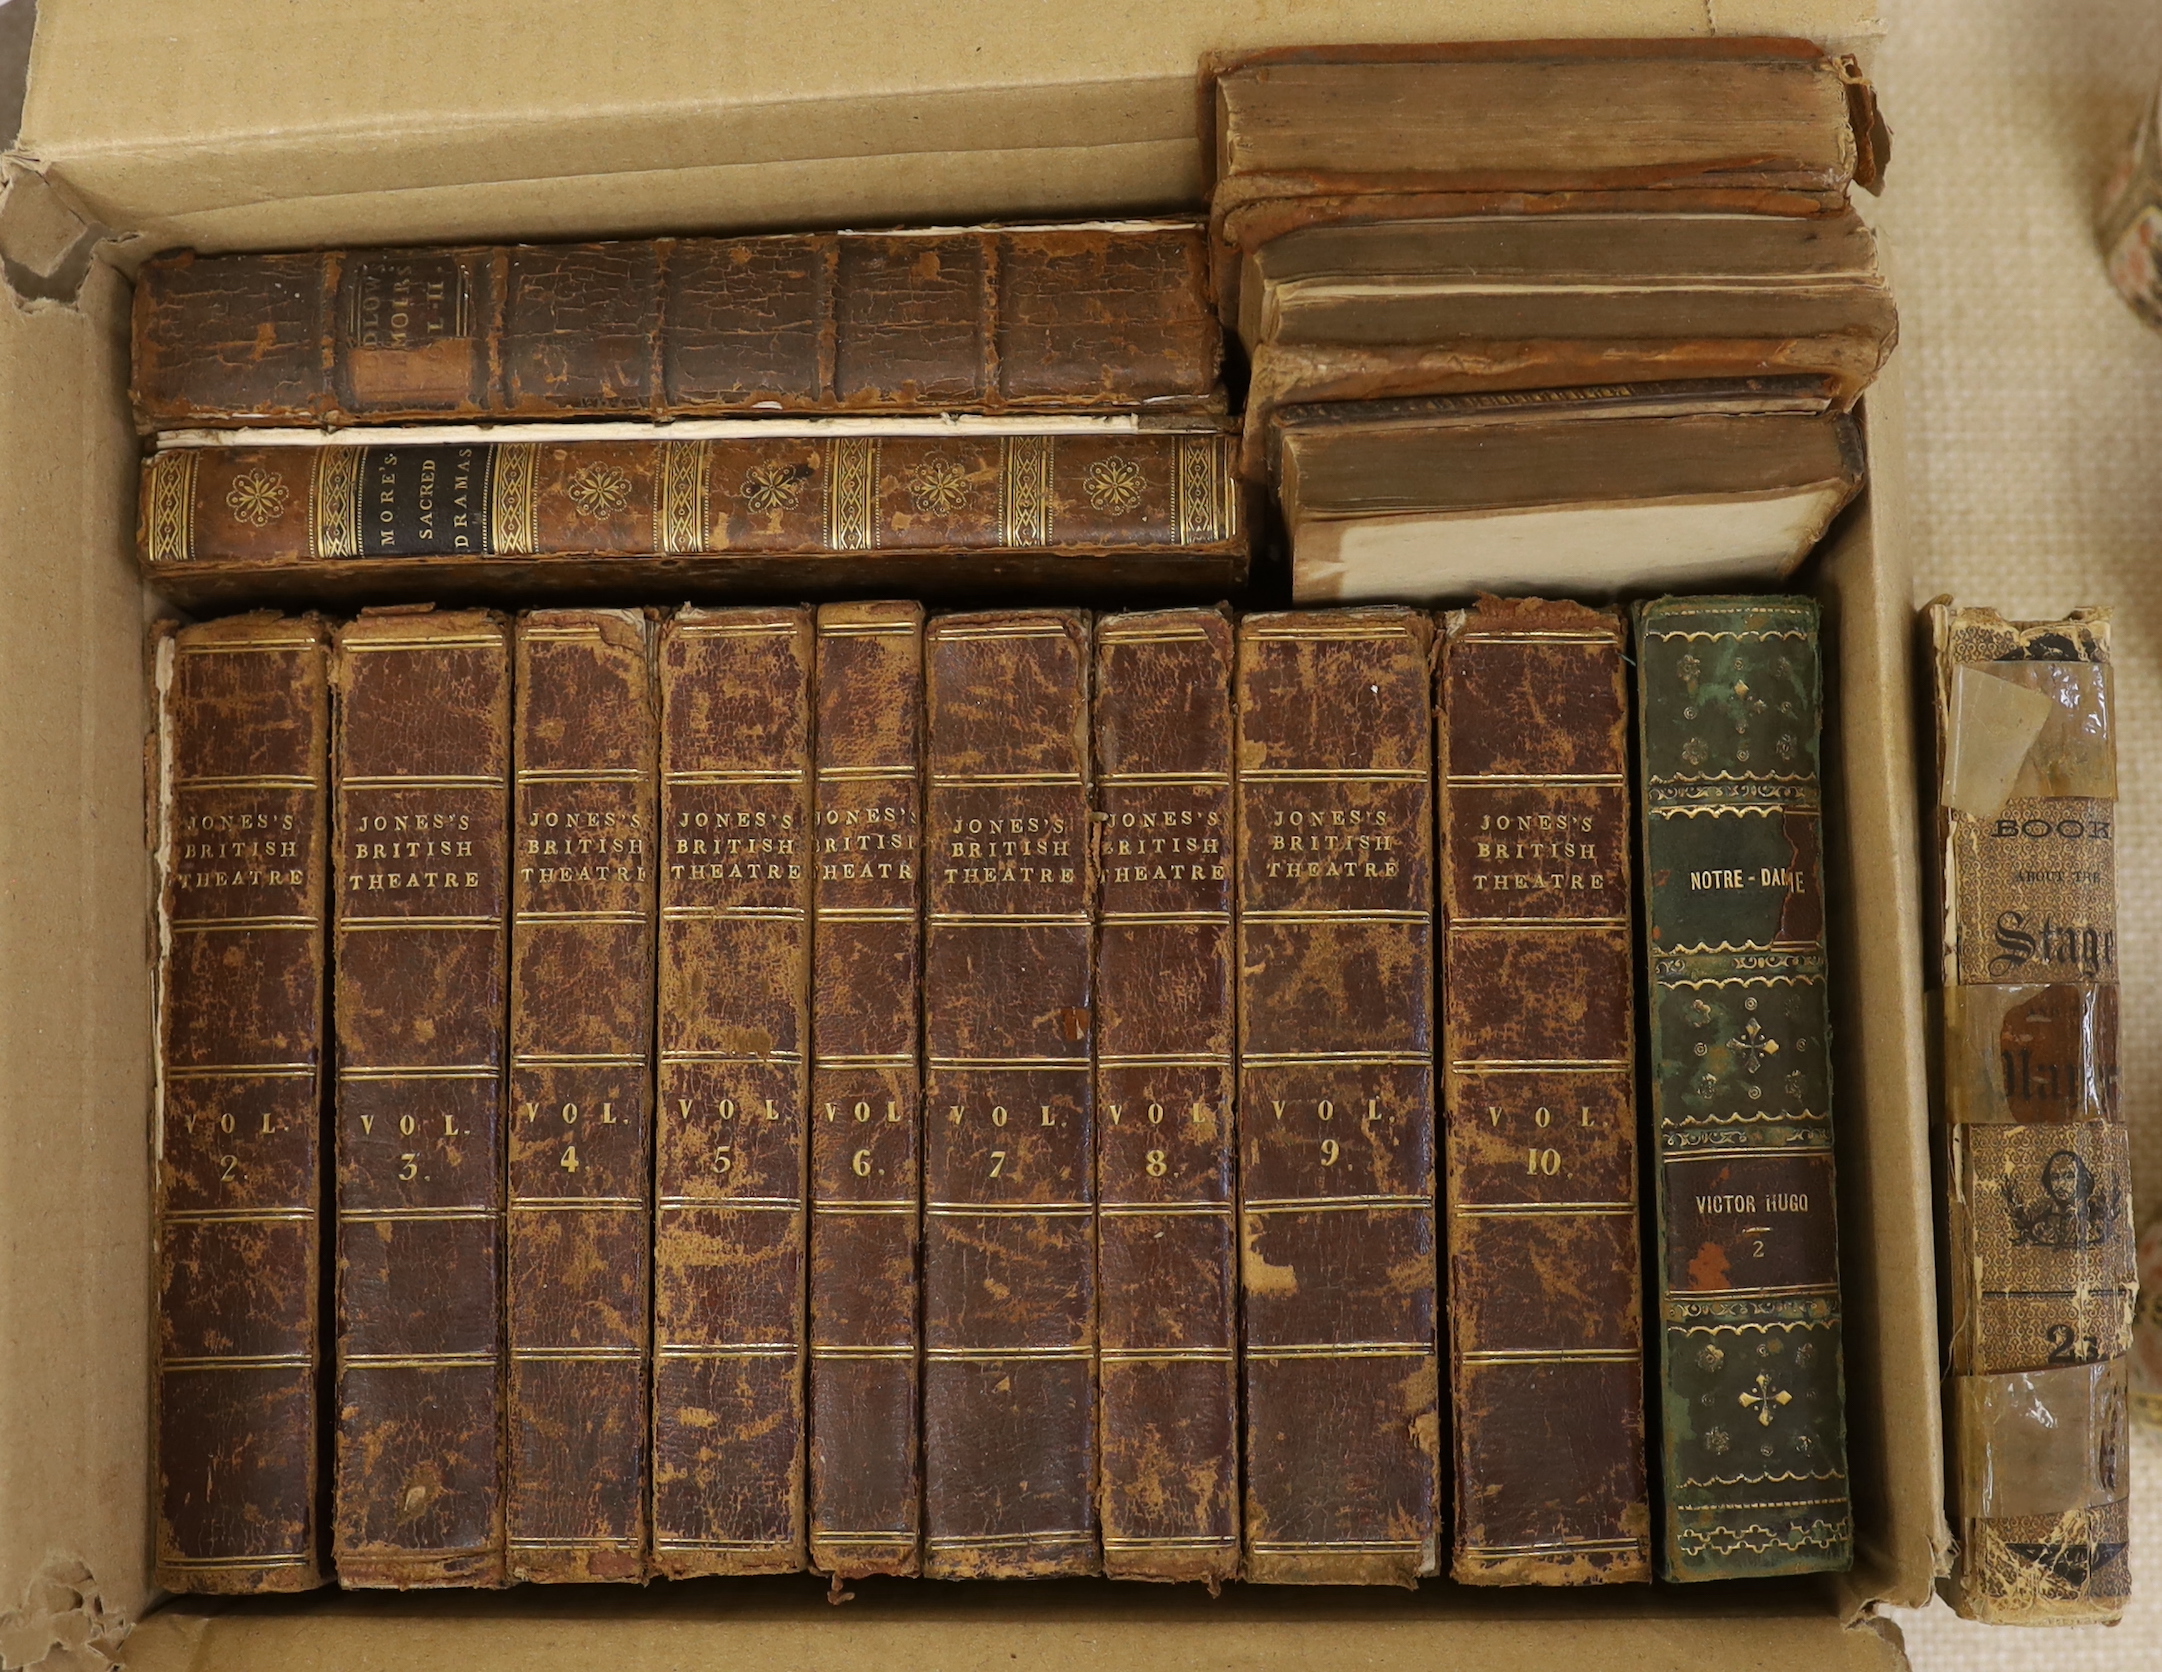 Jones’s British theatre 1794, nine volumes and other antiquarian works